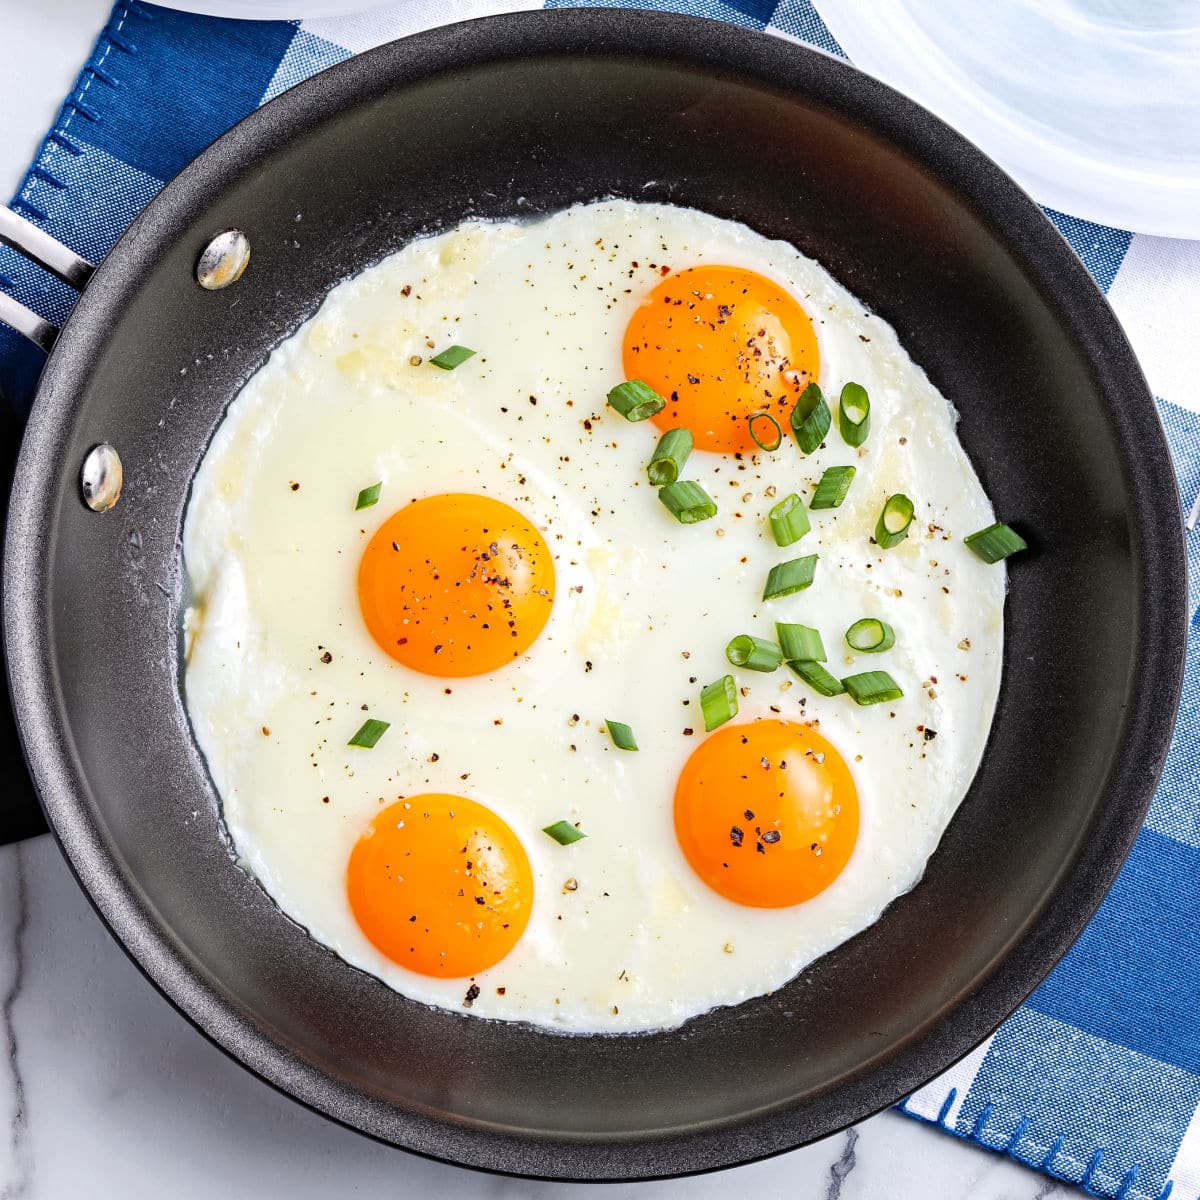 https://foodfolksandfun.net/wp-content/uploads/2022/12/Eggs-Sunny-Side-Up.jpg